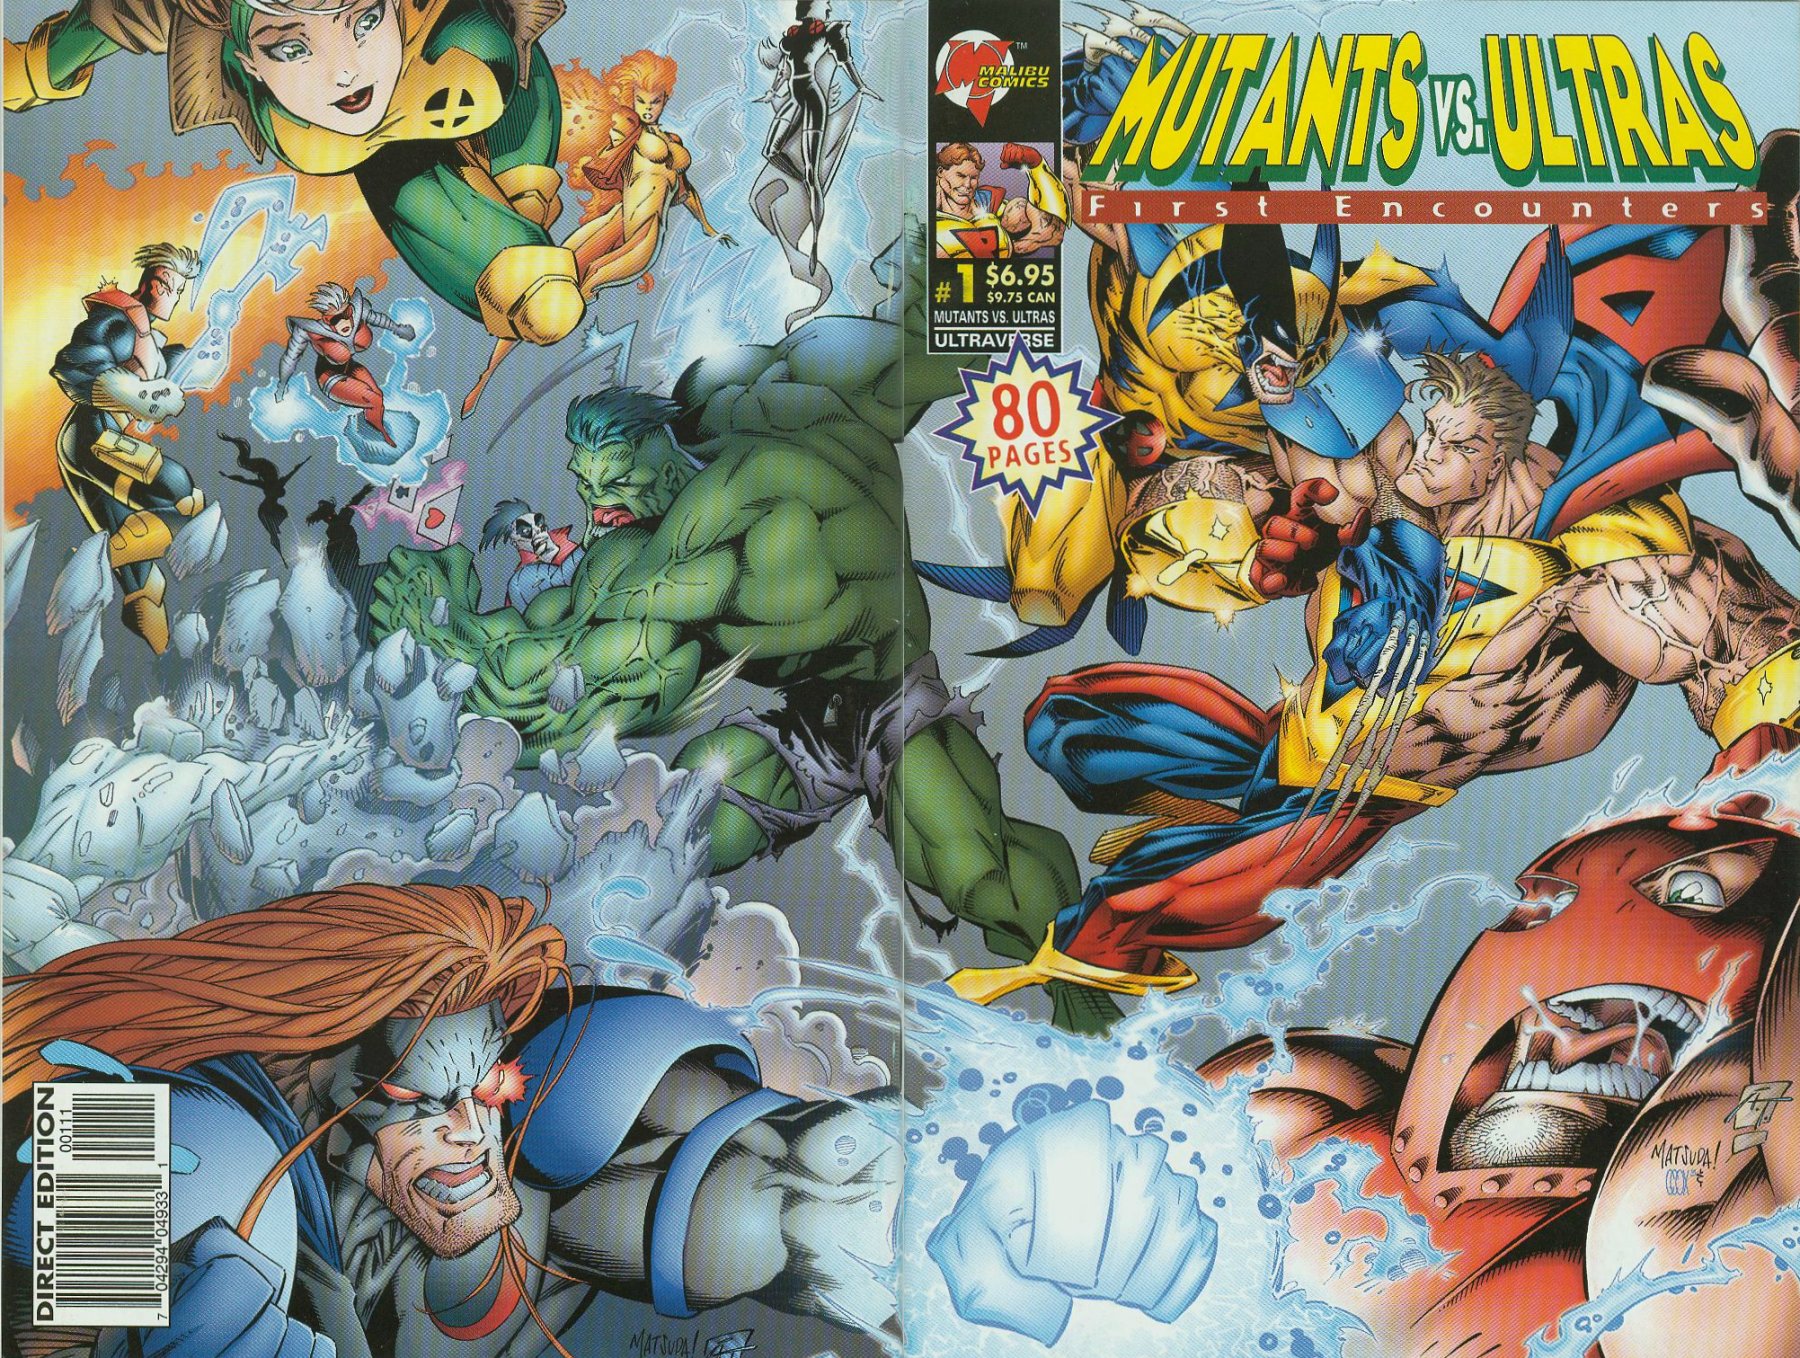 Read online Mutants Vs. Ultras: First Encounters comic -  Issue # Full - 2